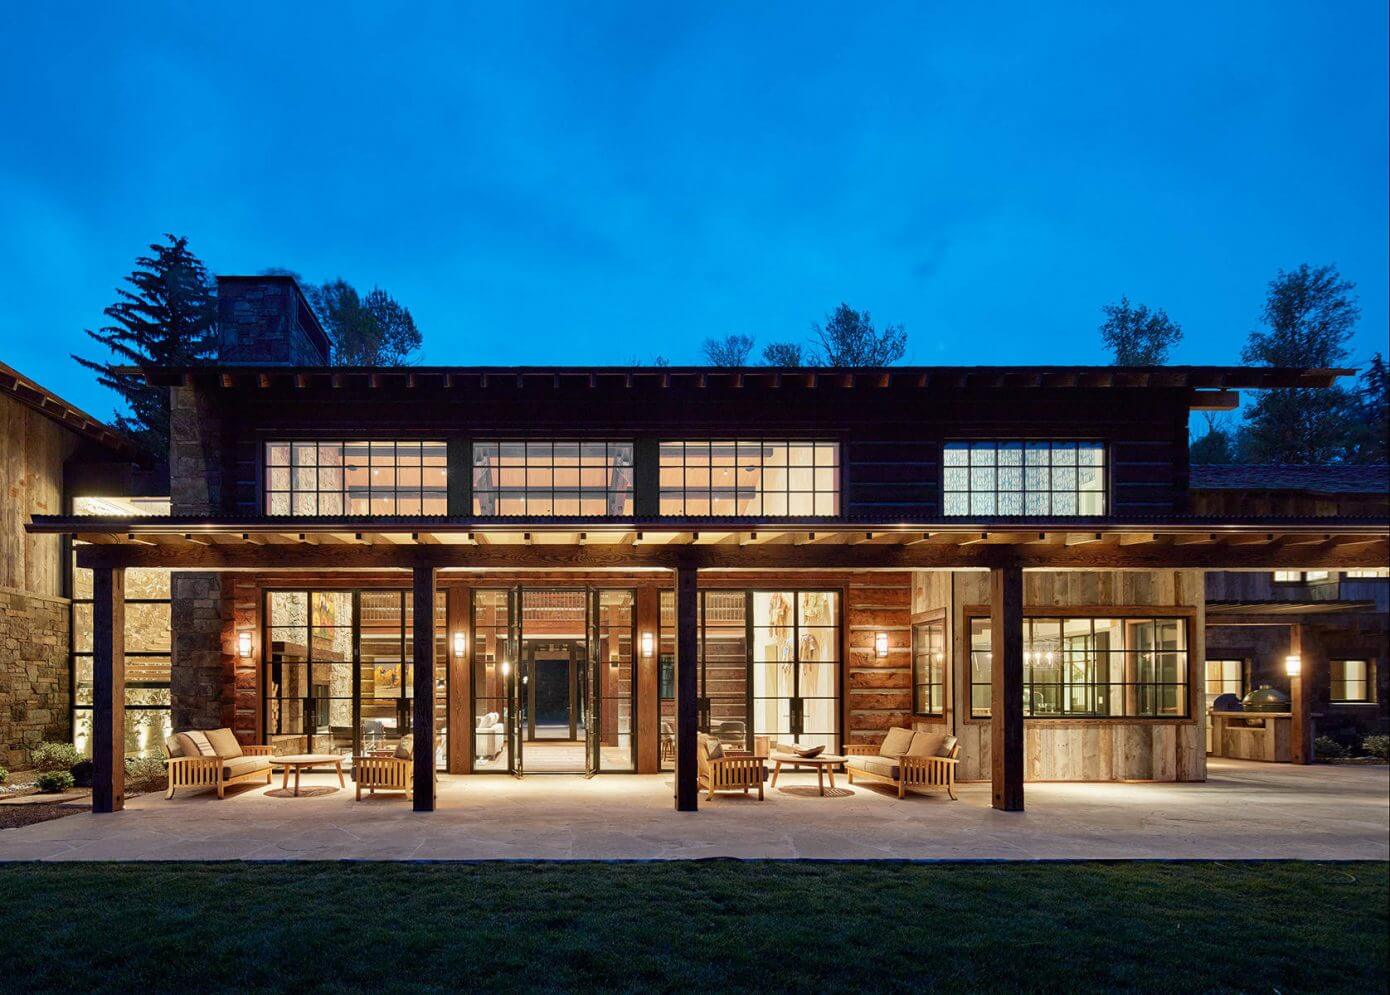 ODR Residence by Carney Logan Burke Architects